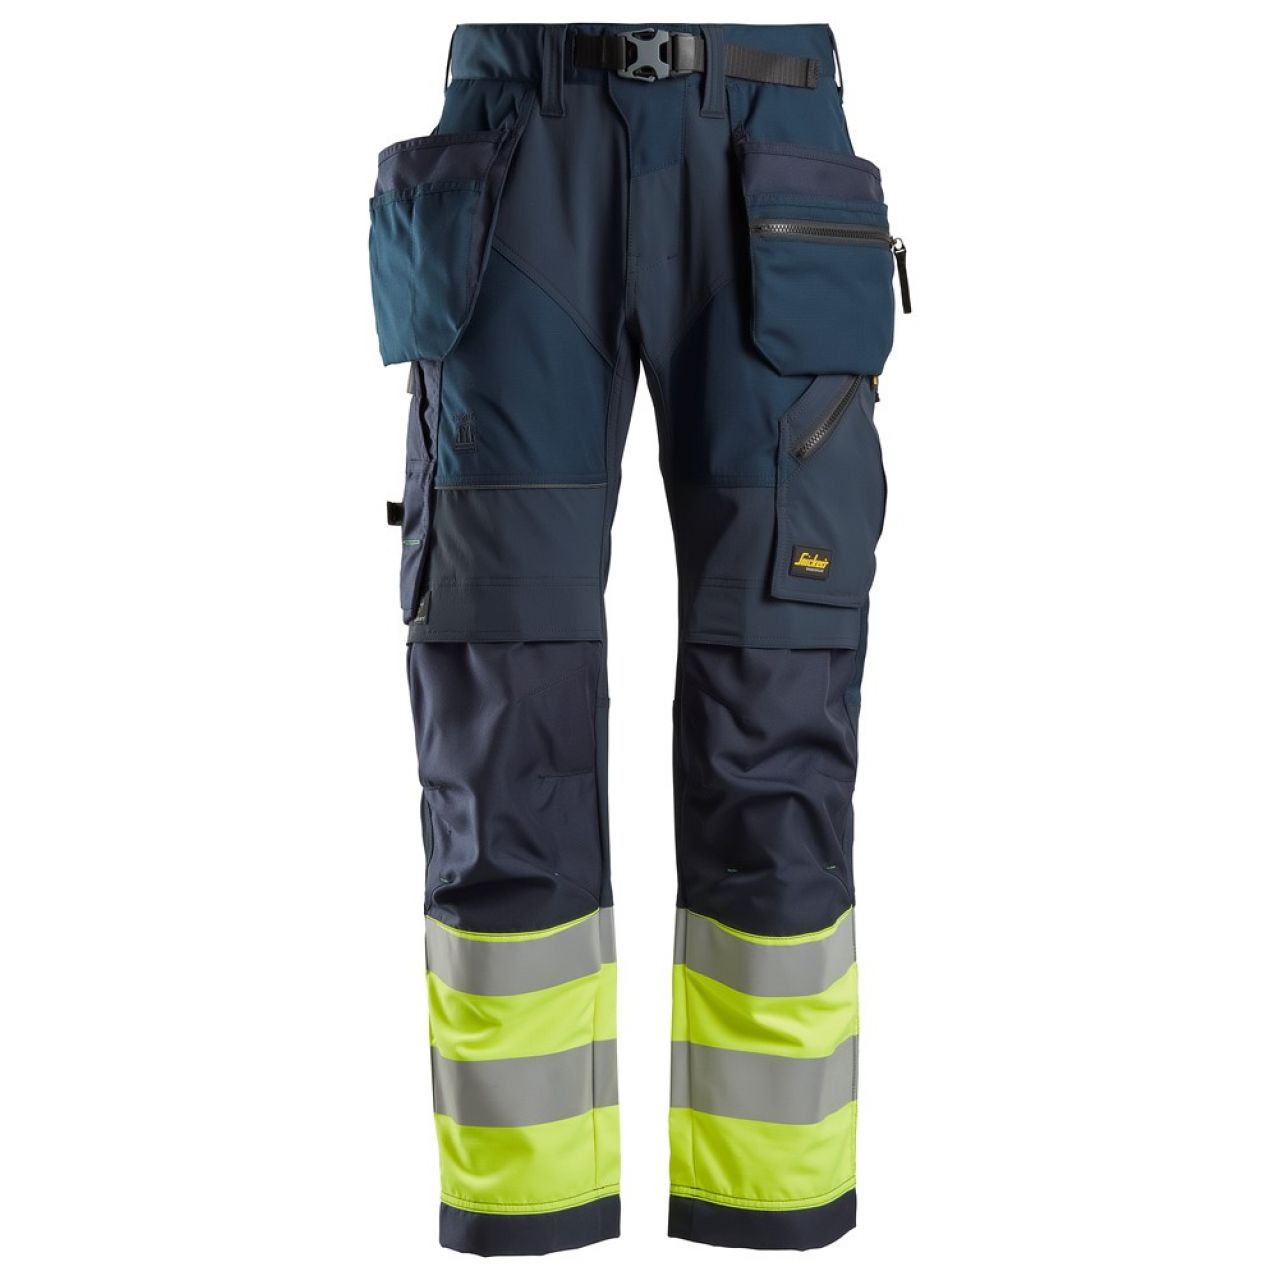 6931 Pantalones largos de trabajo de alta visibilidad clase 1 con bolsillos flotantes FlexiWork azul marino-amarillo talla 52